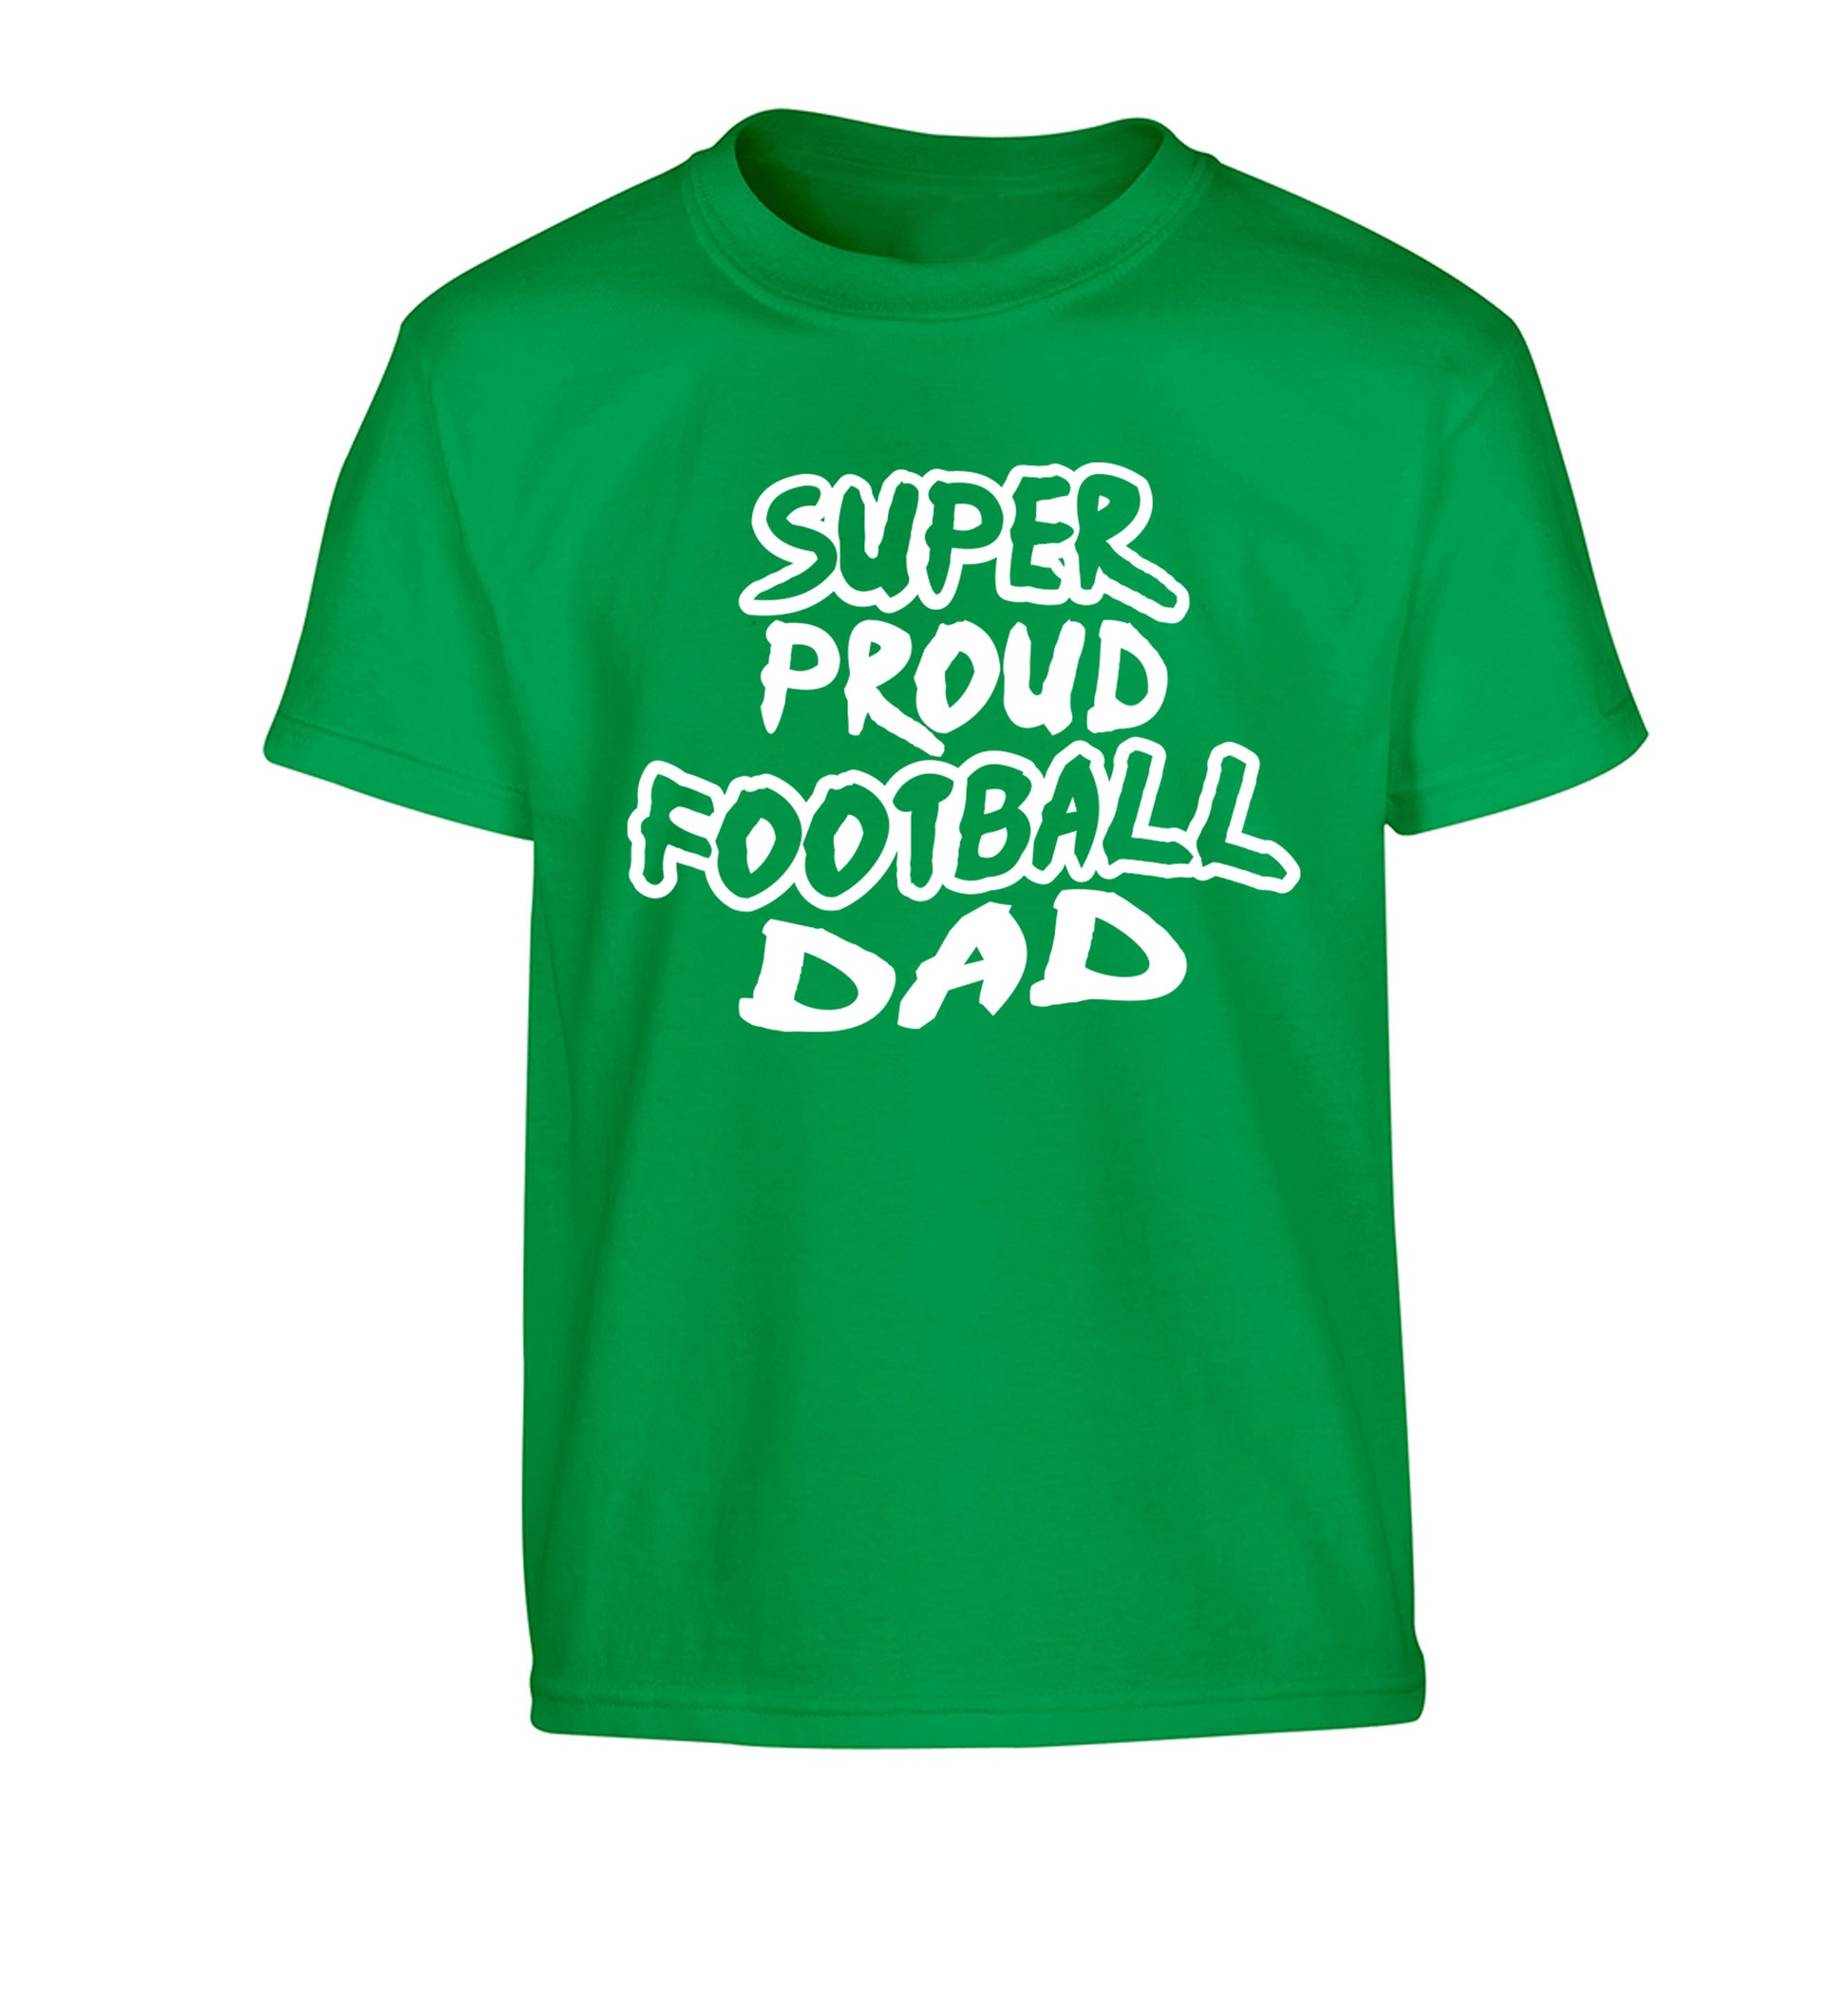 Super proud football dad Children's green Tshirt 12-14 Years